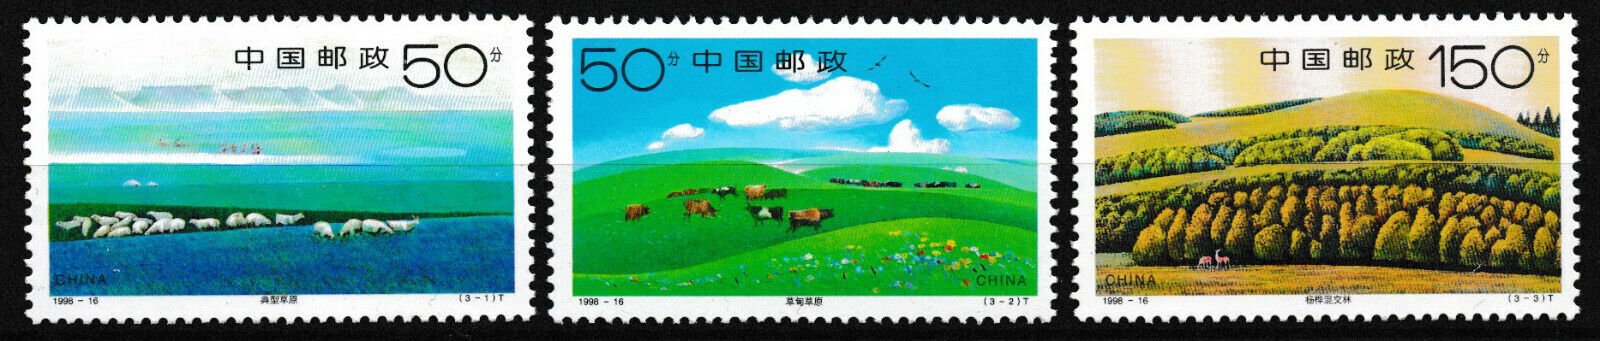 China 1998 - Peisaje Xilinguole, serie neuzata